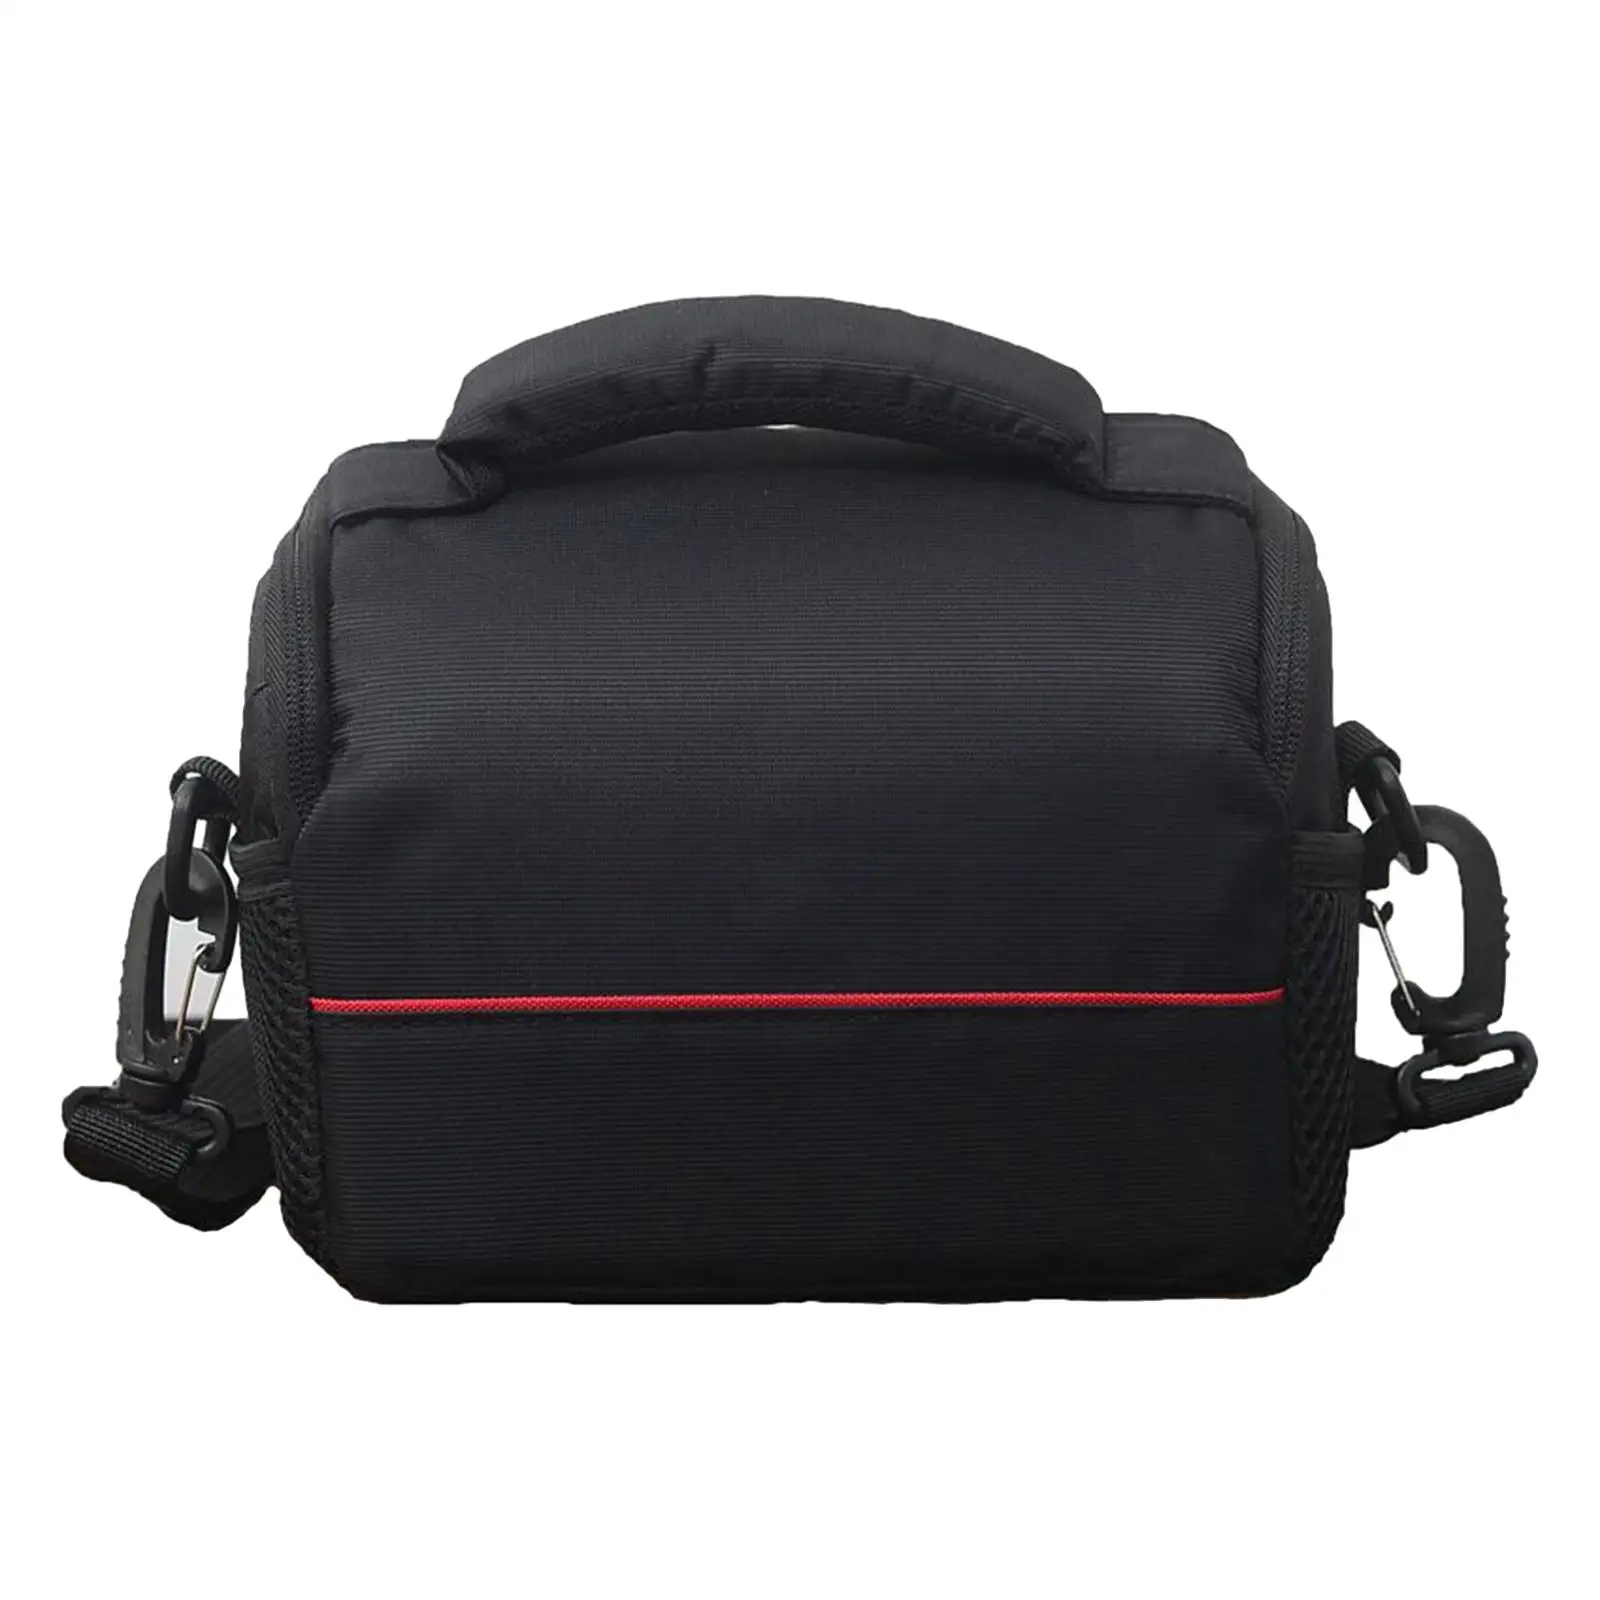 Camera Bag Black Compact Stylish Messenger Bag Travel Photography Bag Small Camera Bag for Women Men DSLR/slr/mirrorless Cameras